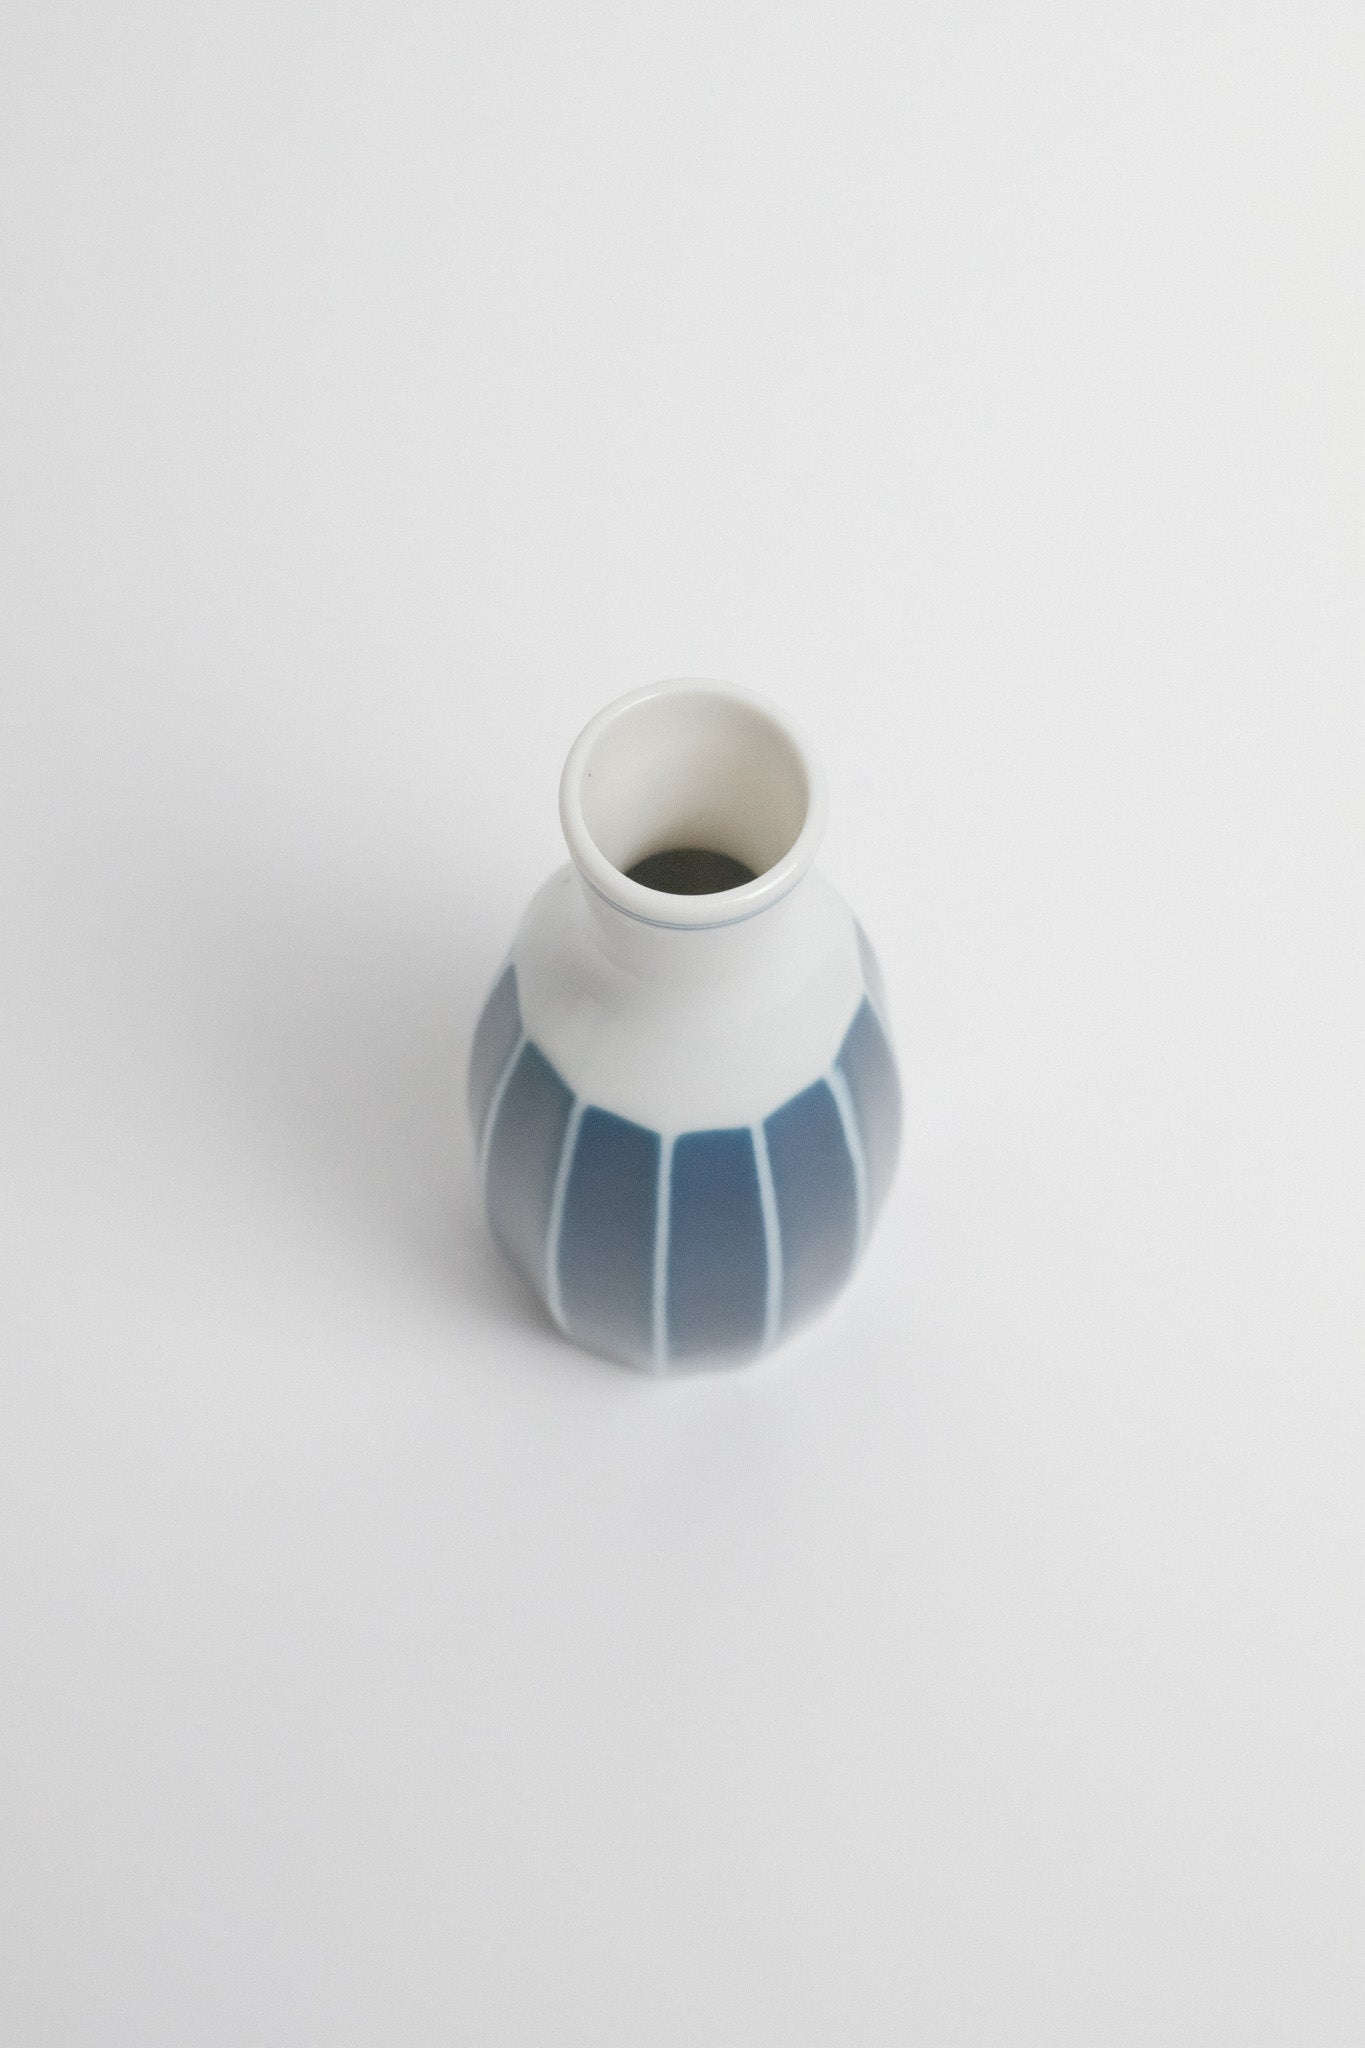 Small Vintage White & Blue Vase